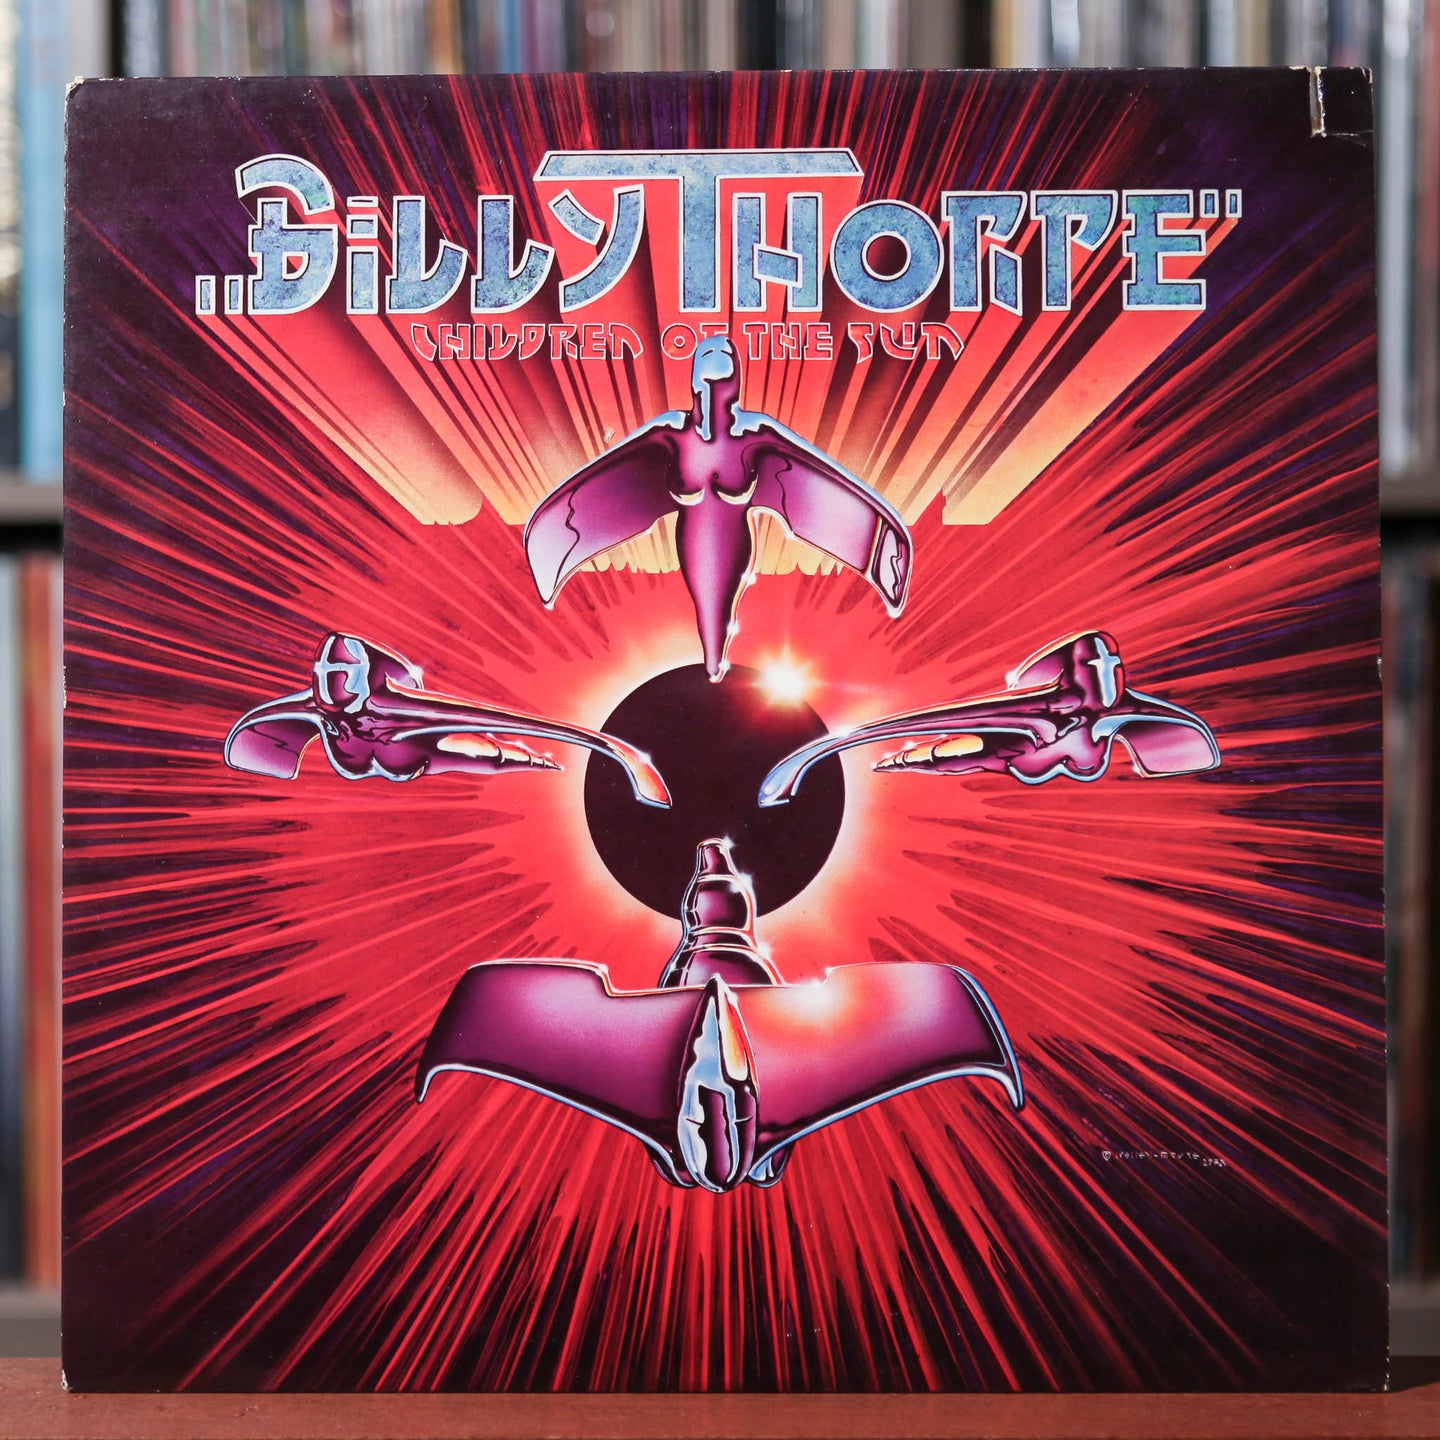 Billy Thorpe - Children Of The Sun - 1979 Capricorn, VG+/VG